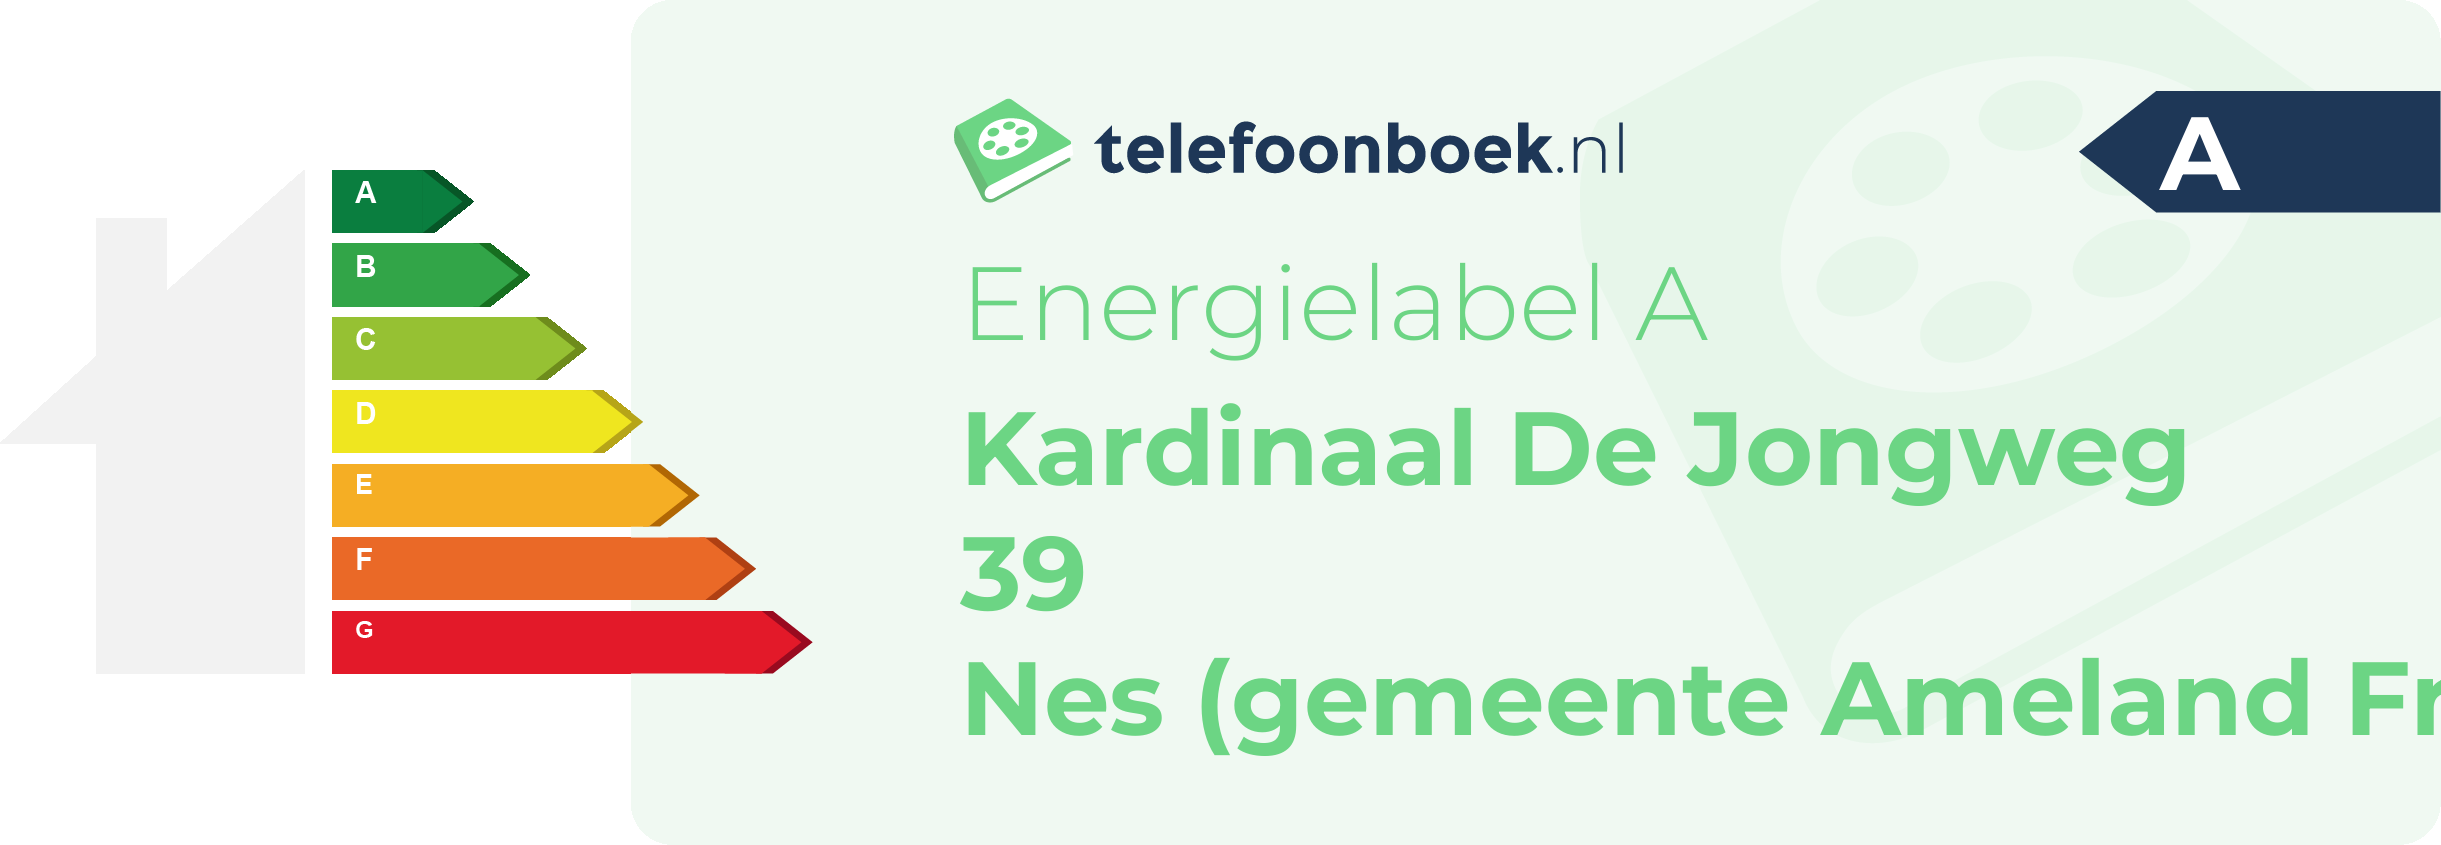 Energielabel Kardinaal De Jongweg 39 Nes (gemeente Ameland Friesland)